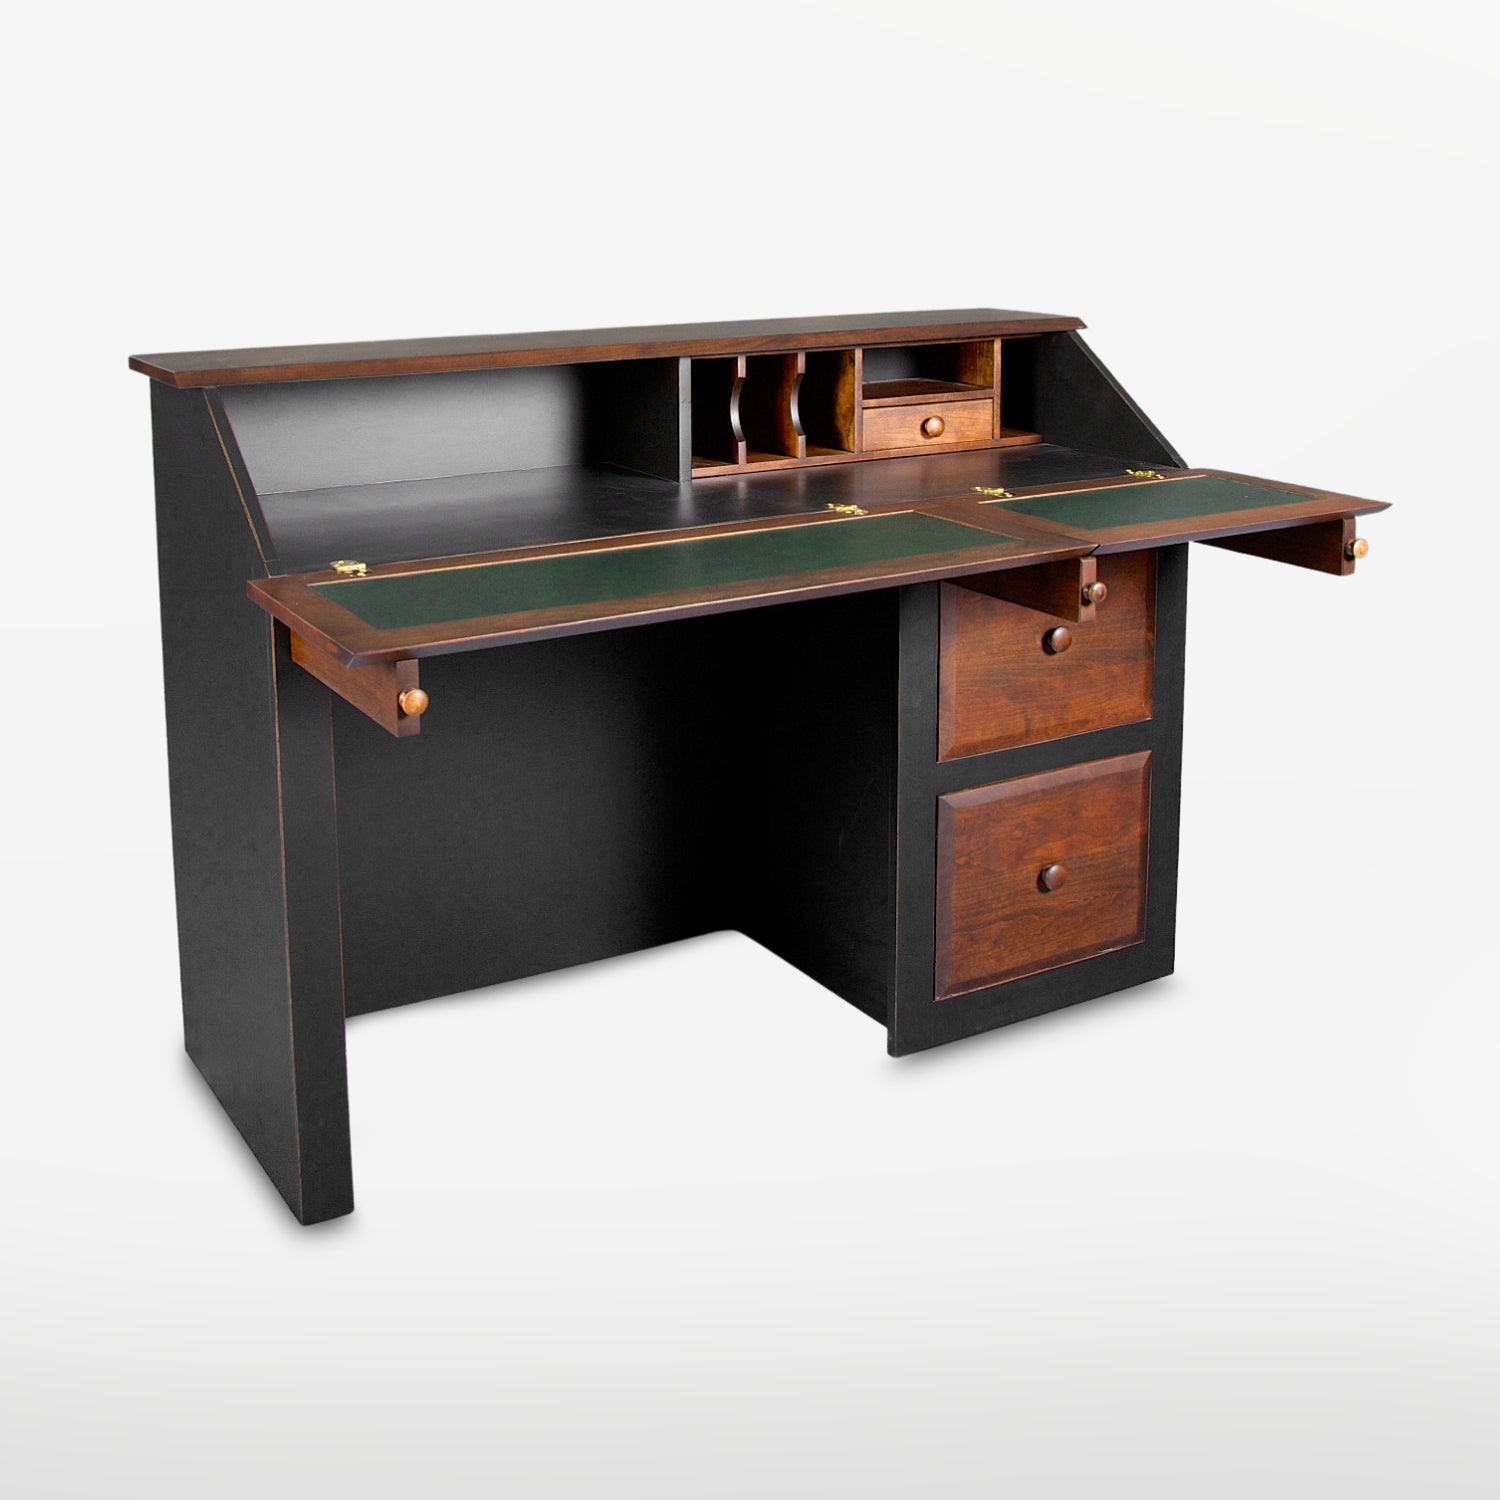 sejr Milliard Halvkreds Flip Top Desk | Rustic Wood Desk with Drawers | HUNT Country Furniture